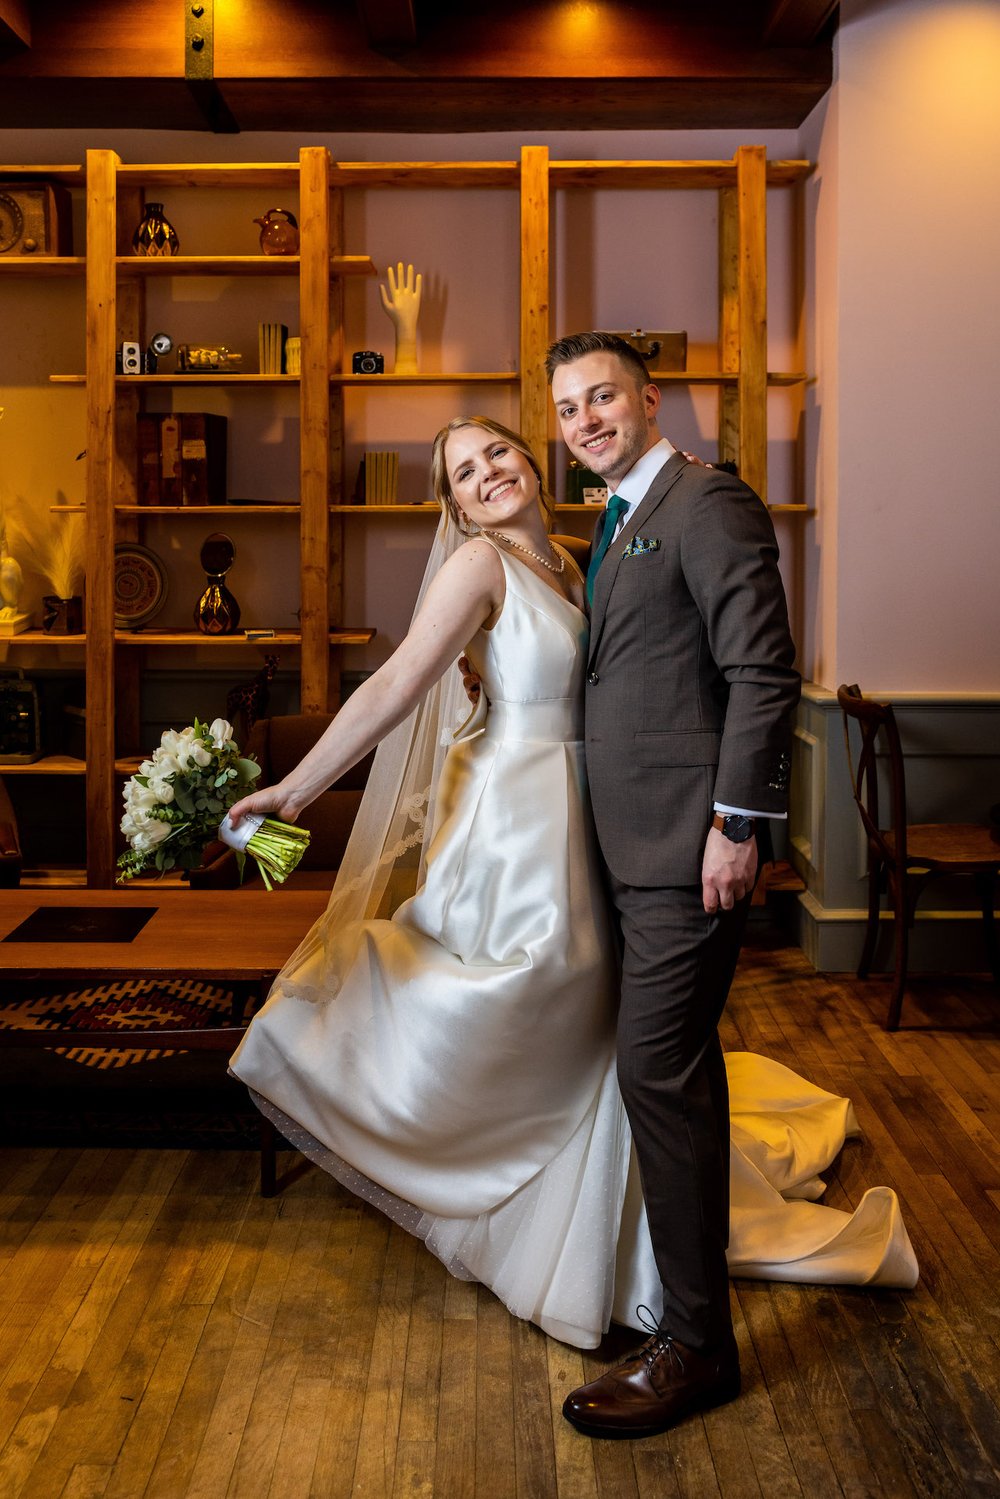 Alex Maldonado Photography | Chicago Wedding and lifestyle Photographer | wedding photos selina hotel wedding couple bride and groom happy excited